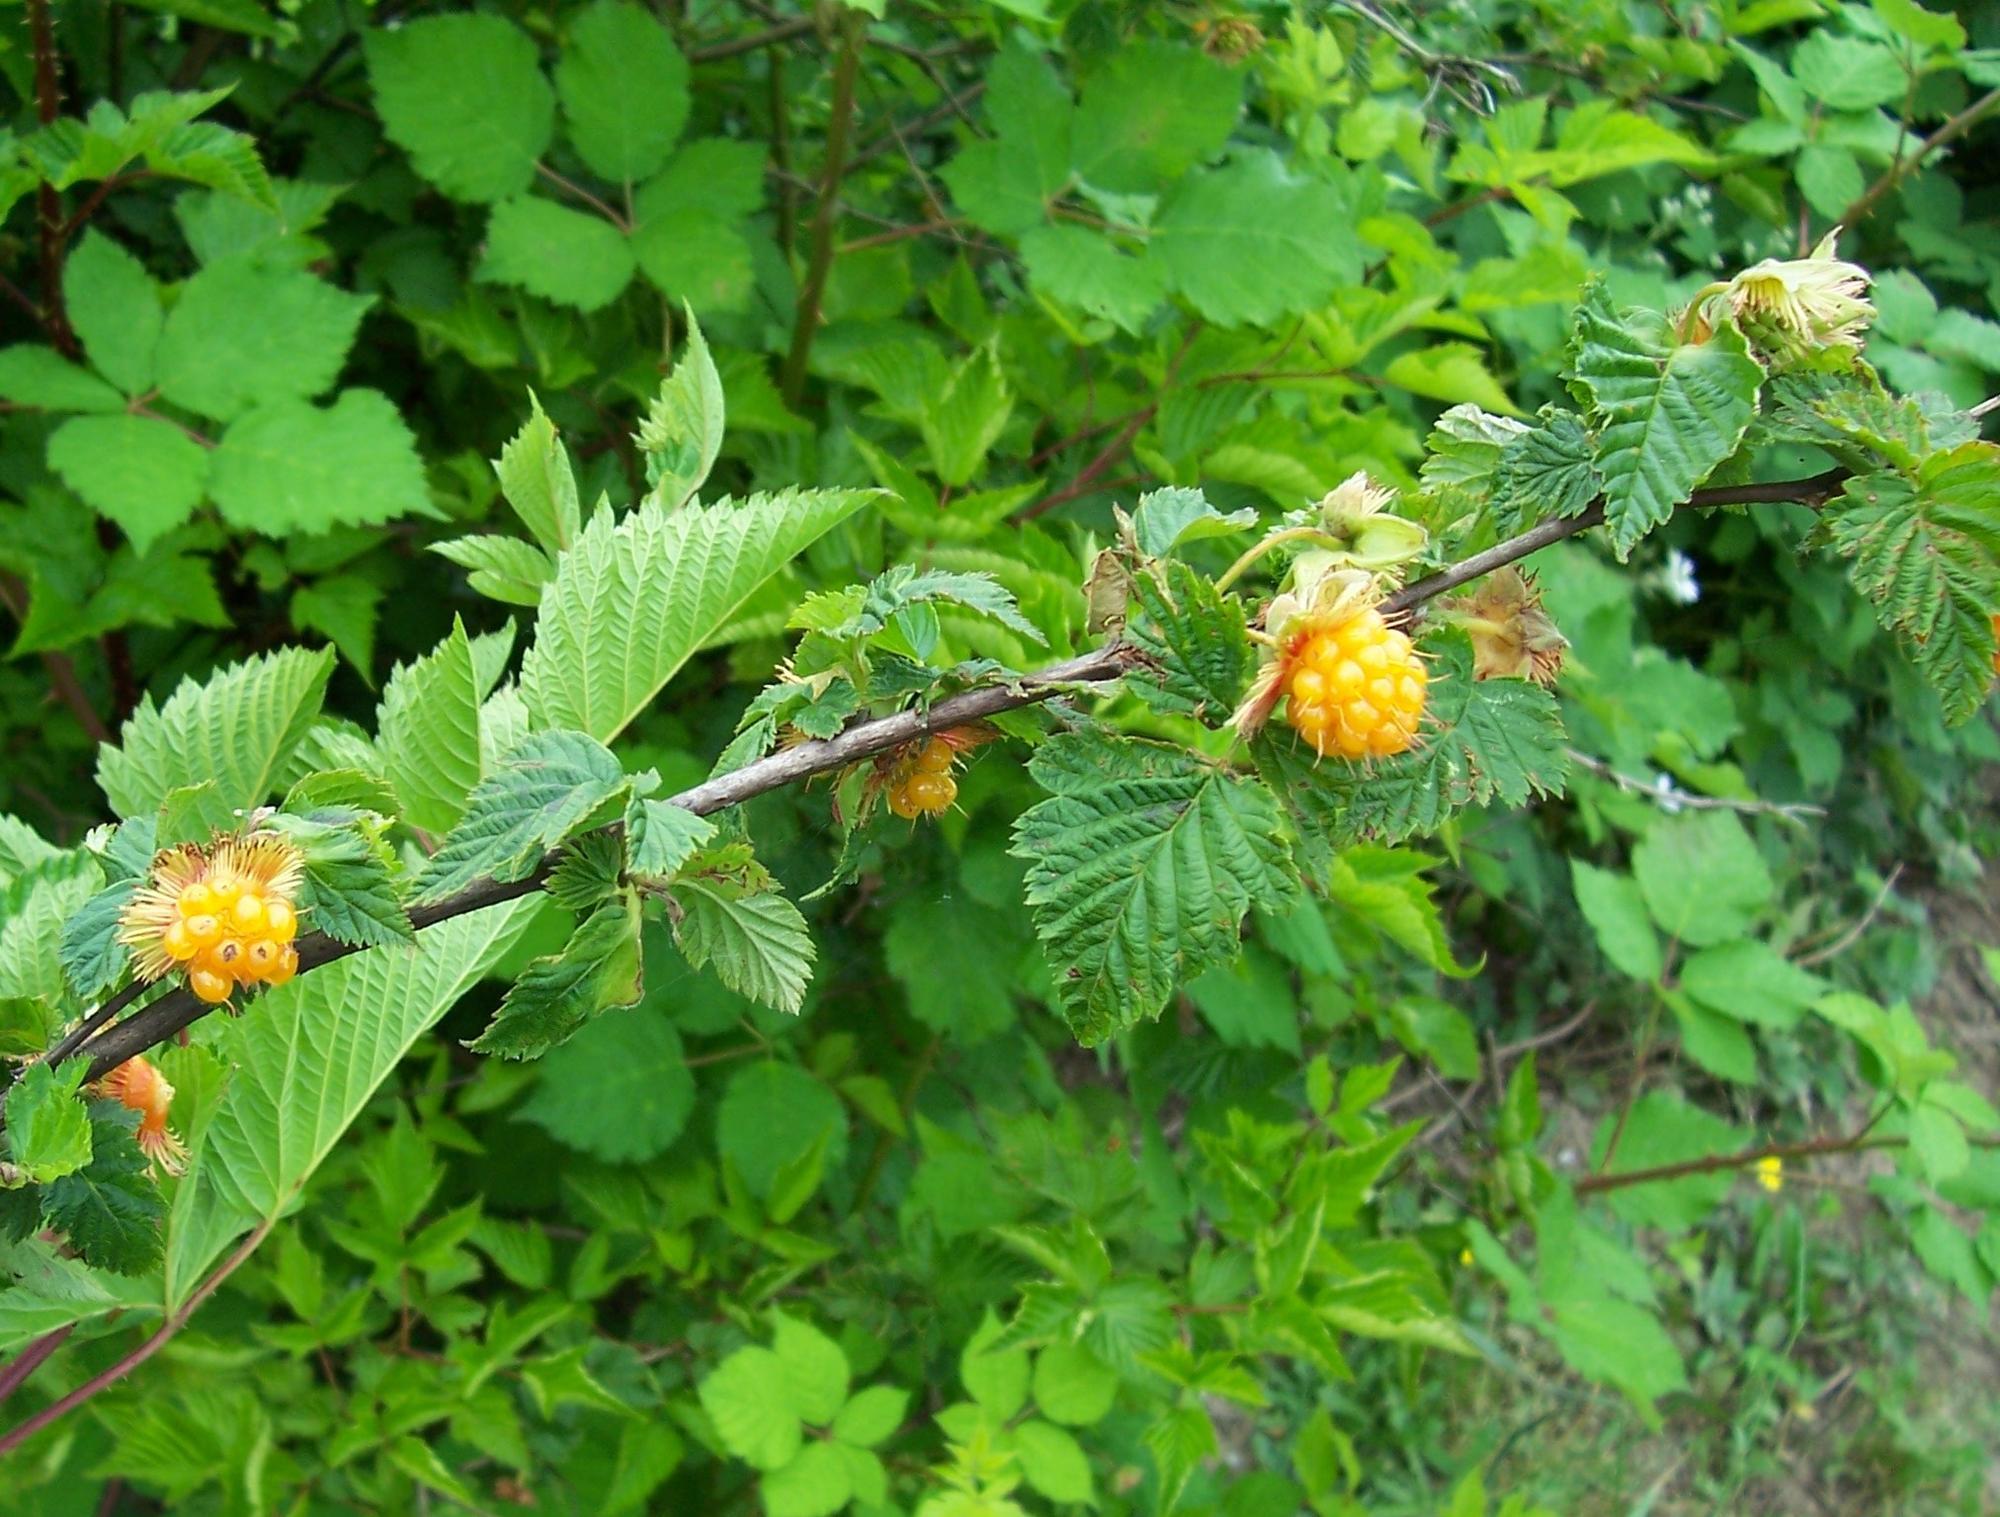 native salmonberry raspberry showing immature fruit